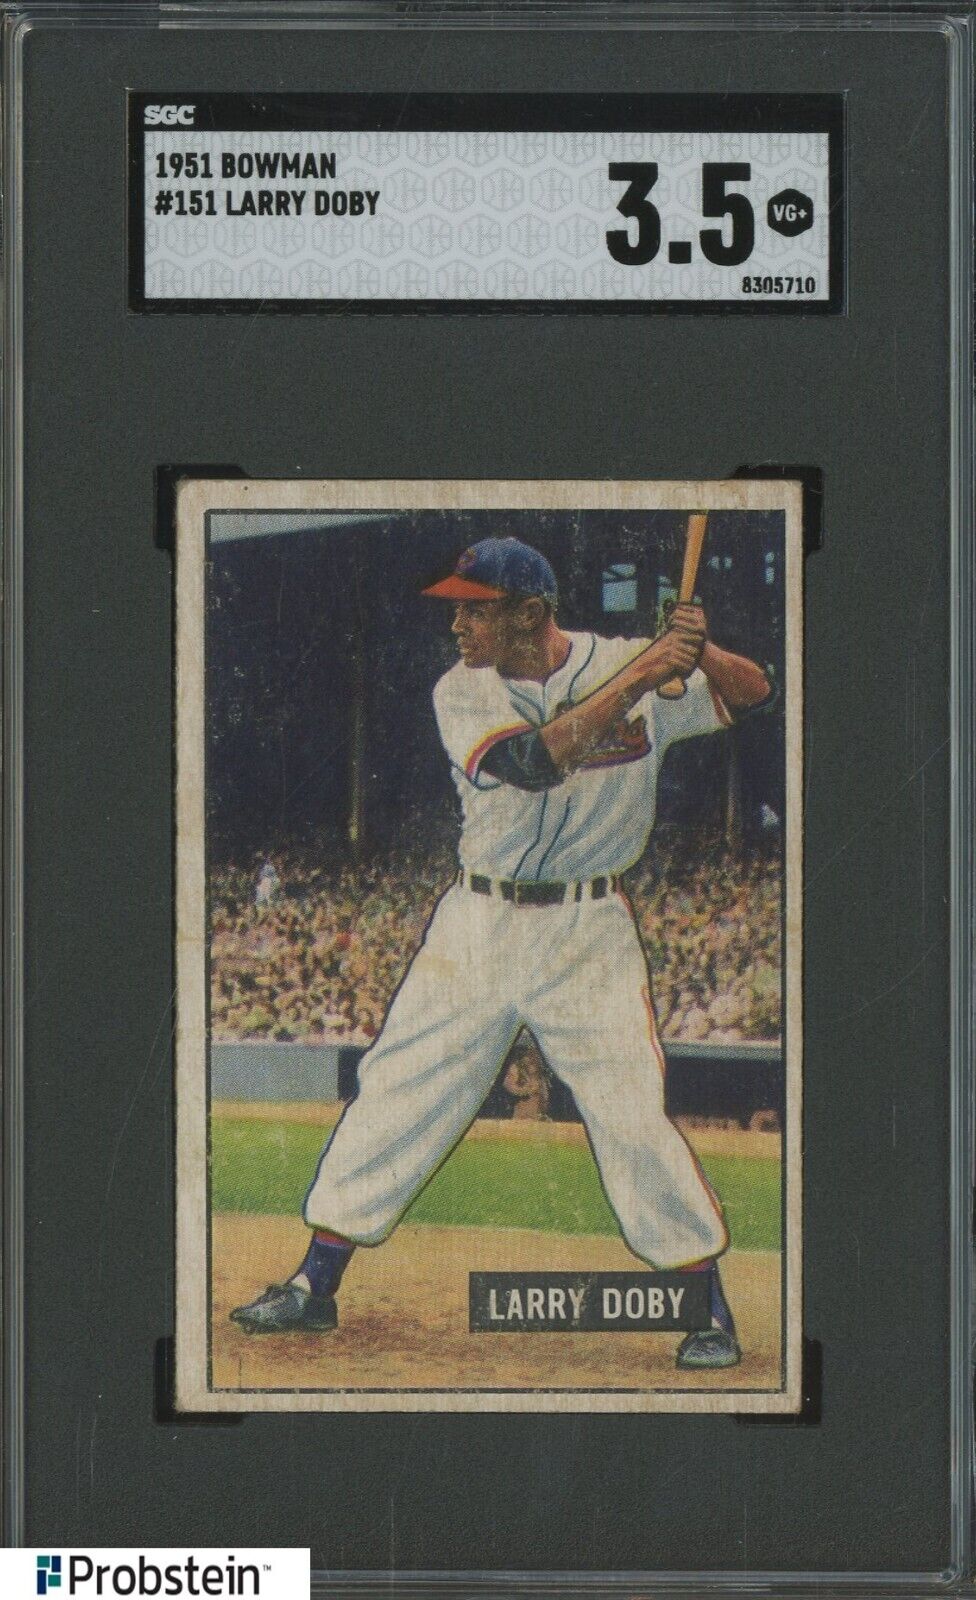 1951 Bowman #151 Larry Doby Cleveland Indians HOF SGC 3.5 VG+